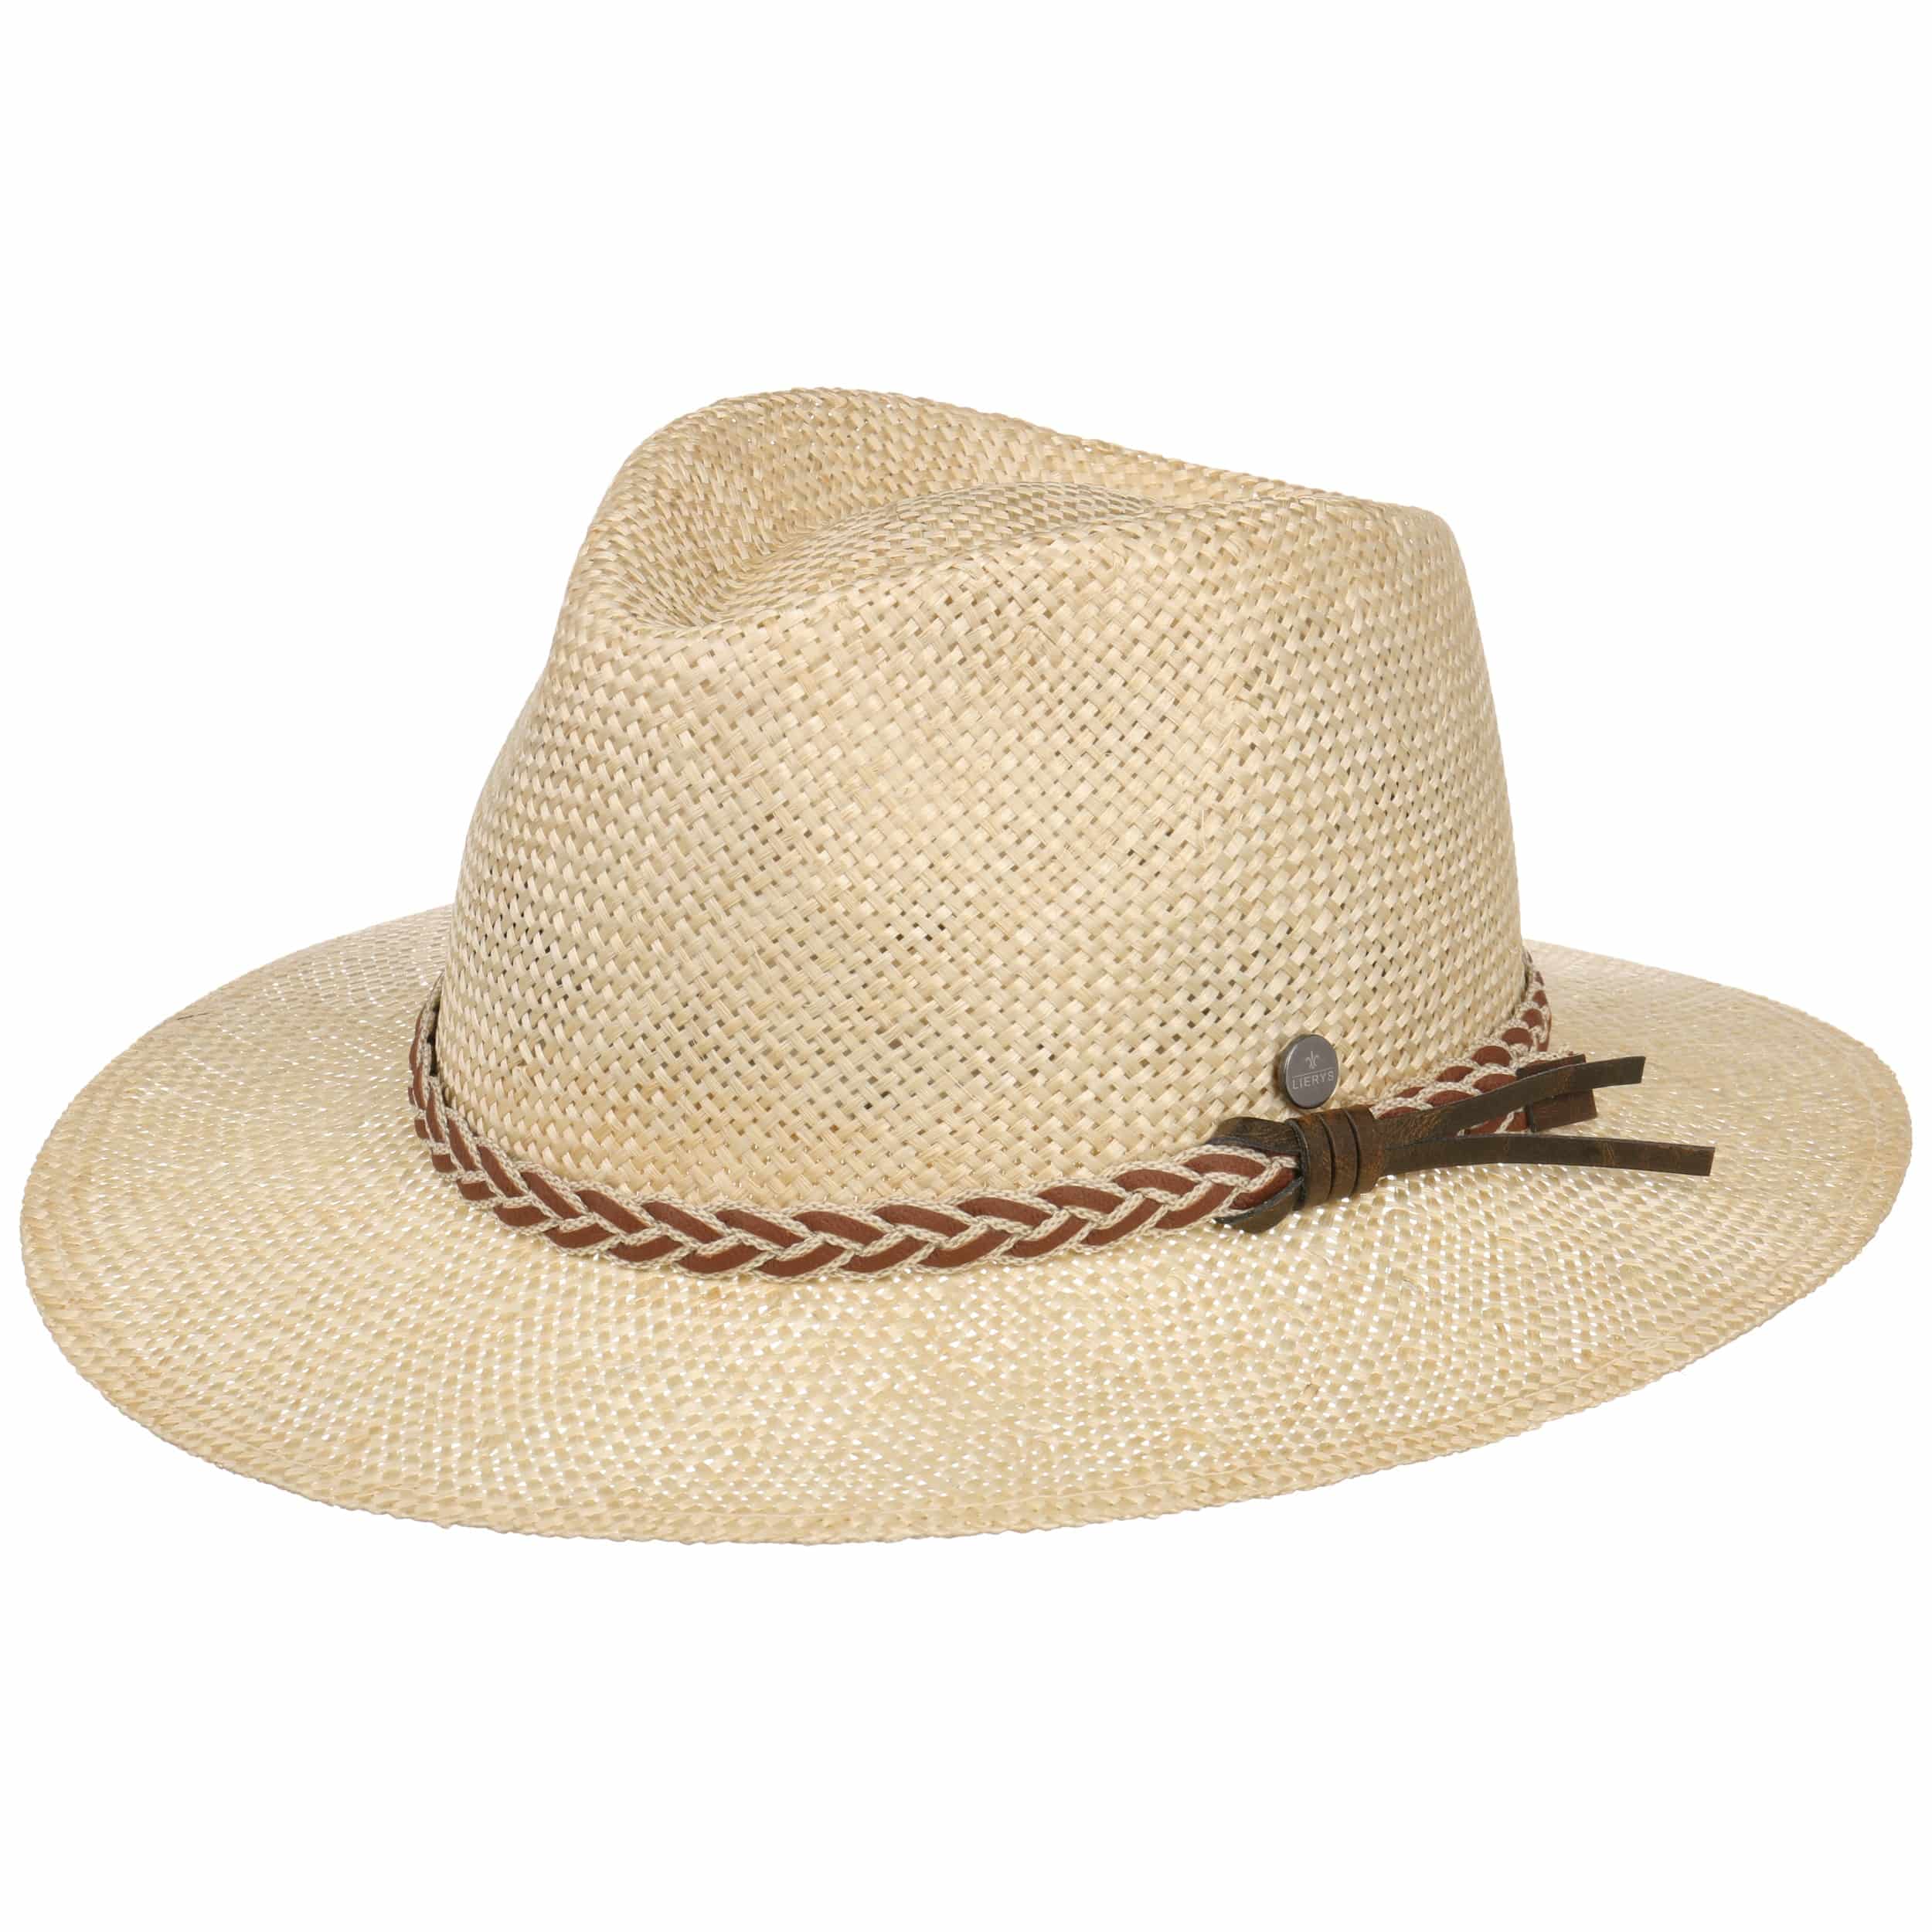 Ramie Traveller Straw Hat by Lierys - 61,95